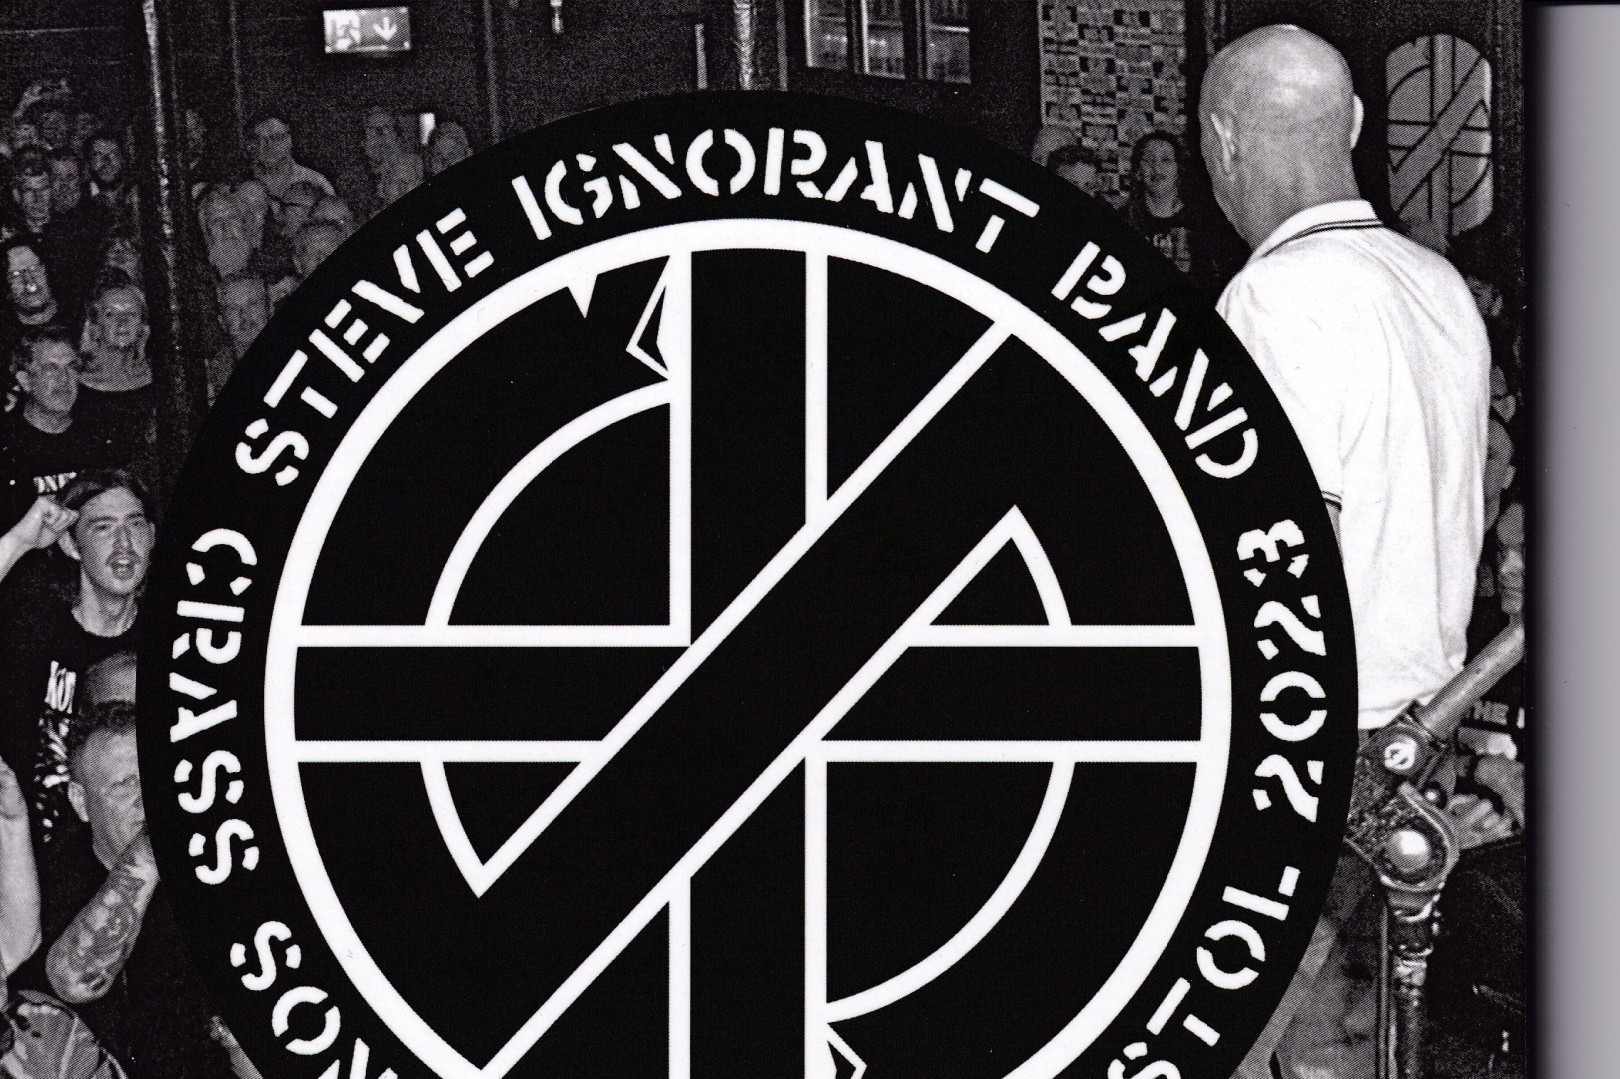 Steve Ignorant releases new live CD